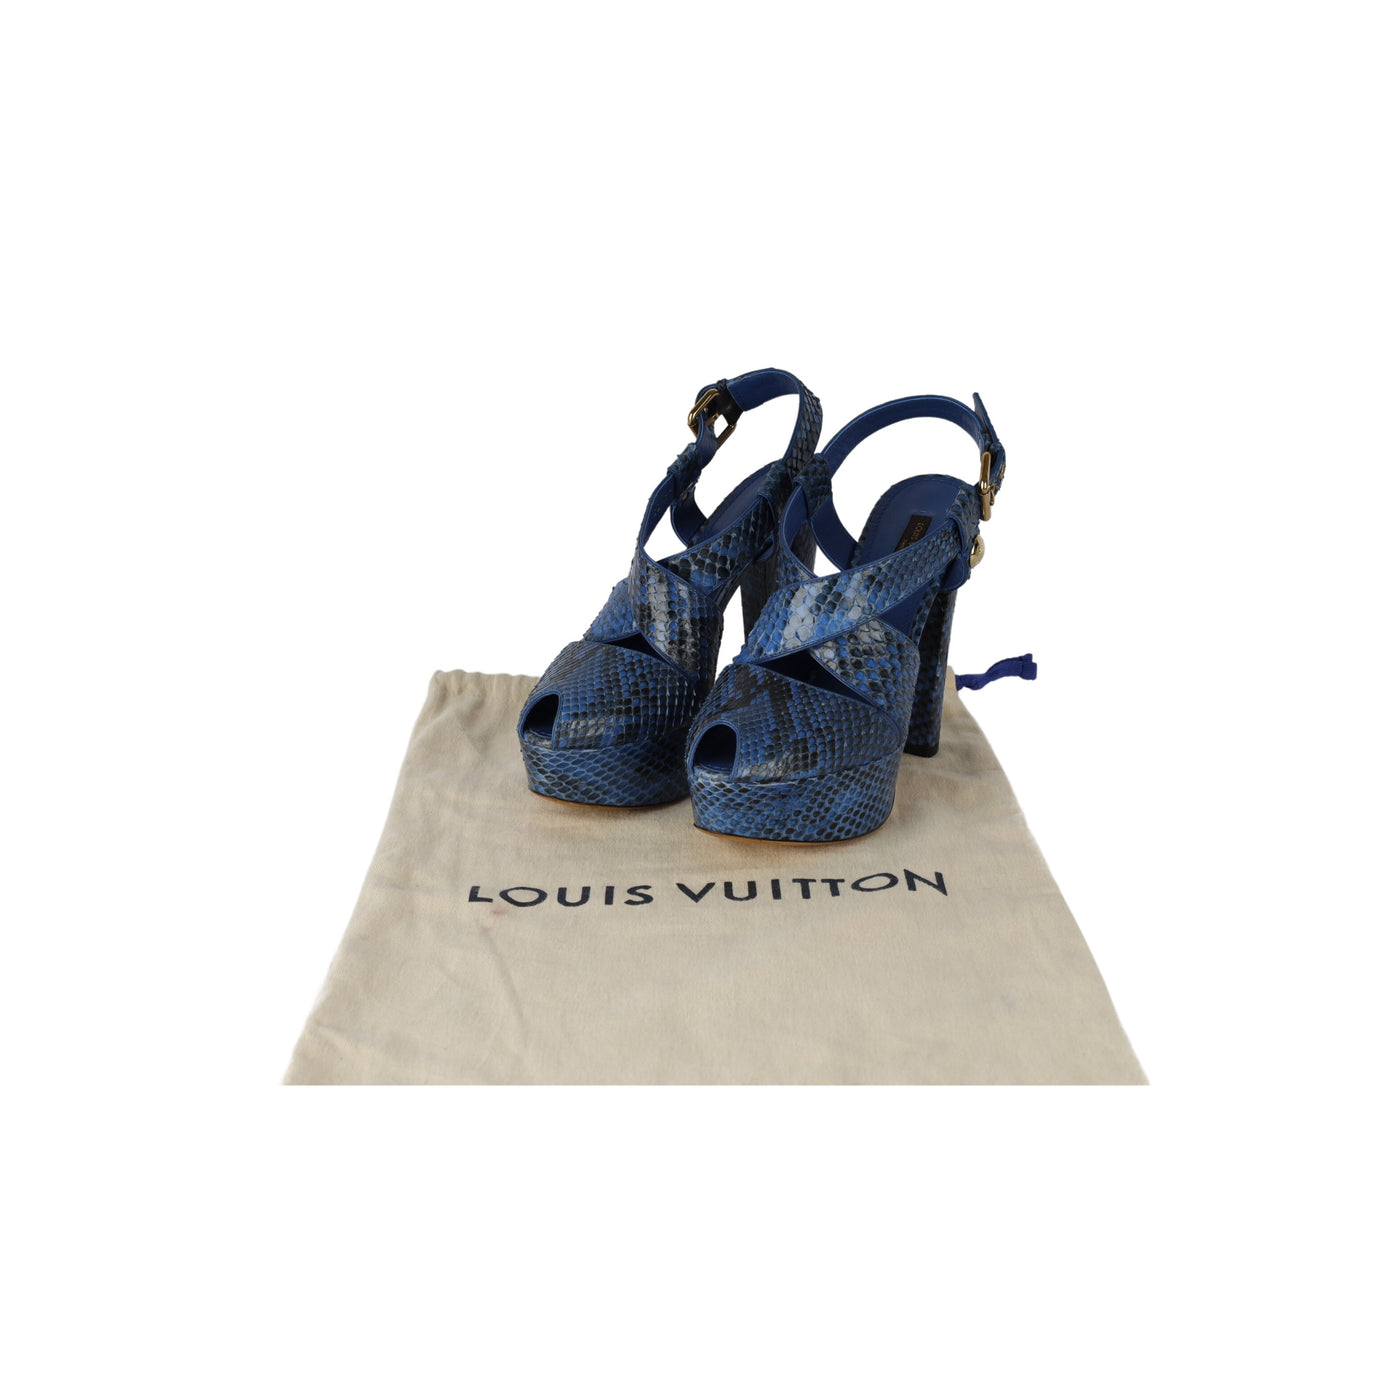 Secondhand Louis Vuitton Snakeskin Peep-toe Platform Sandals